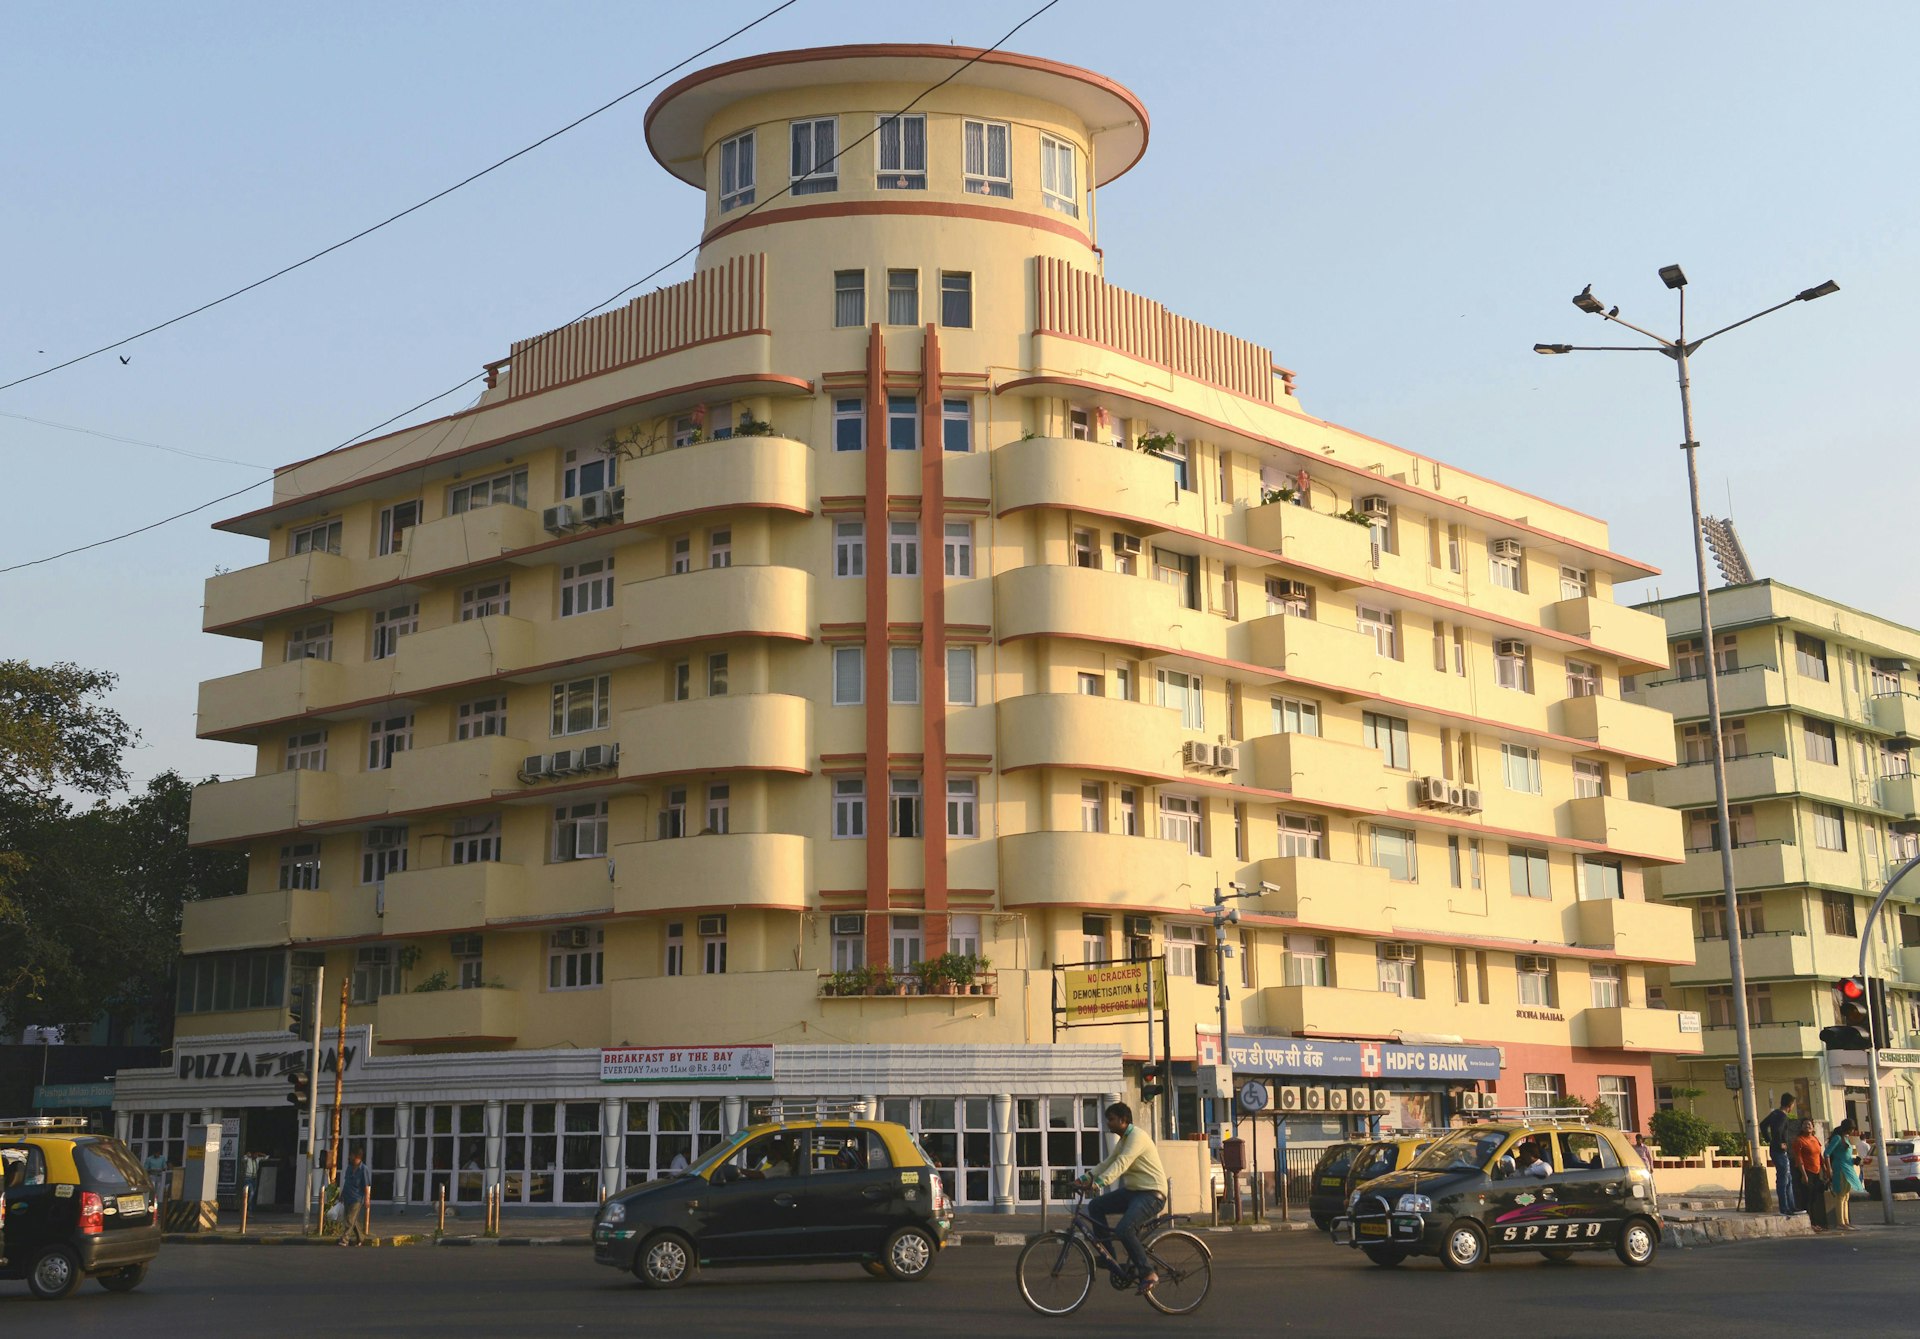 Iconic Art Deco apartments on Mumbai seafront © Punit Paranjpe / Getty Images